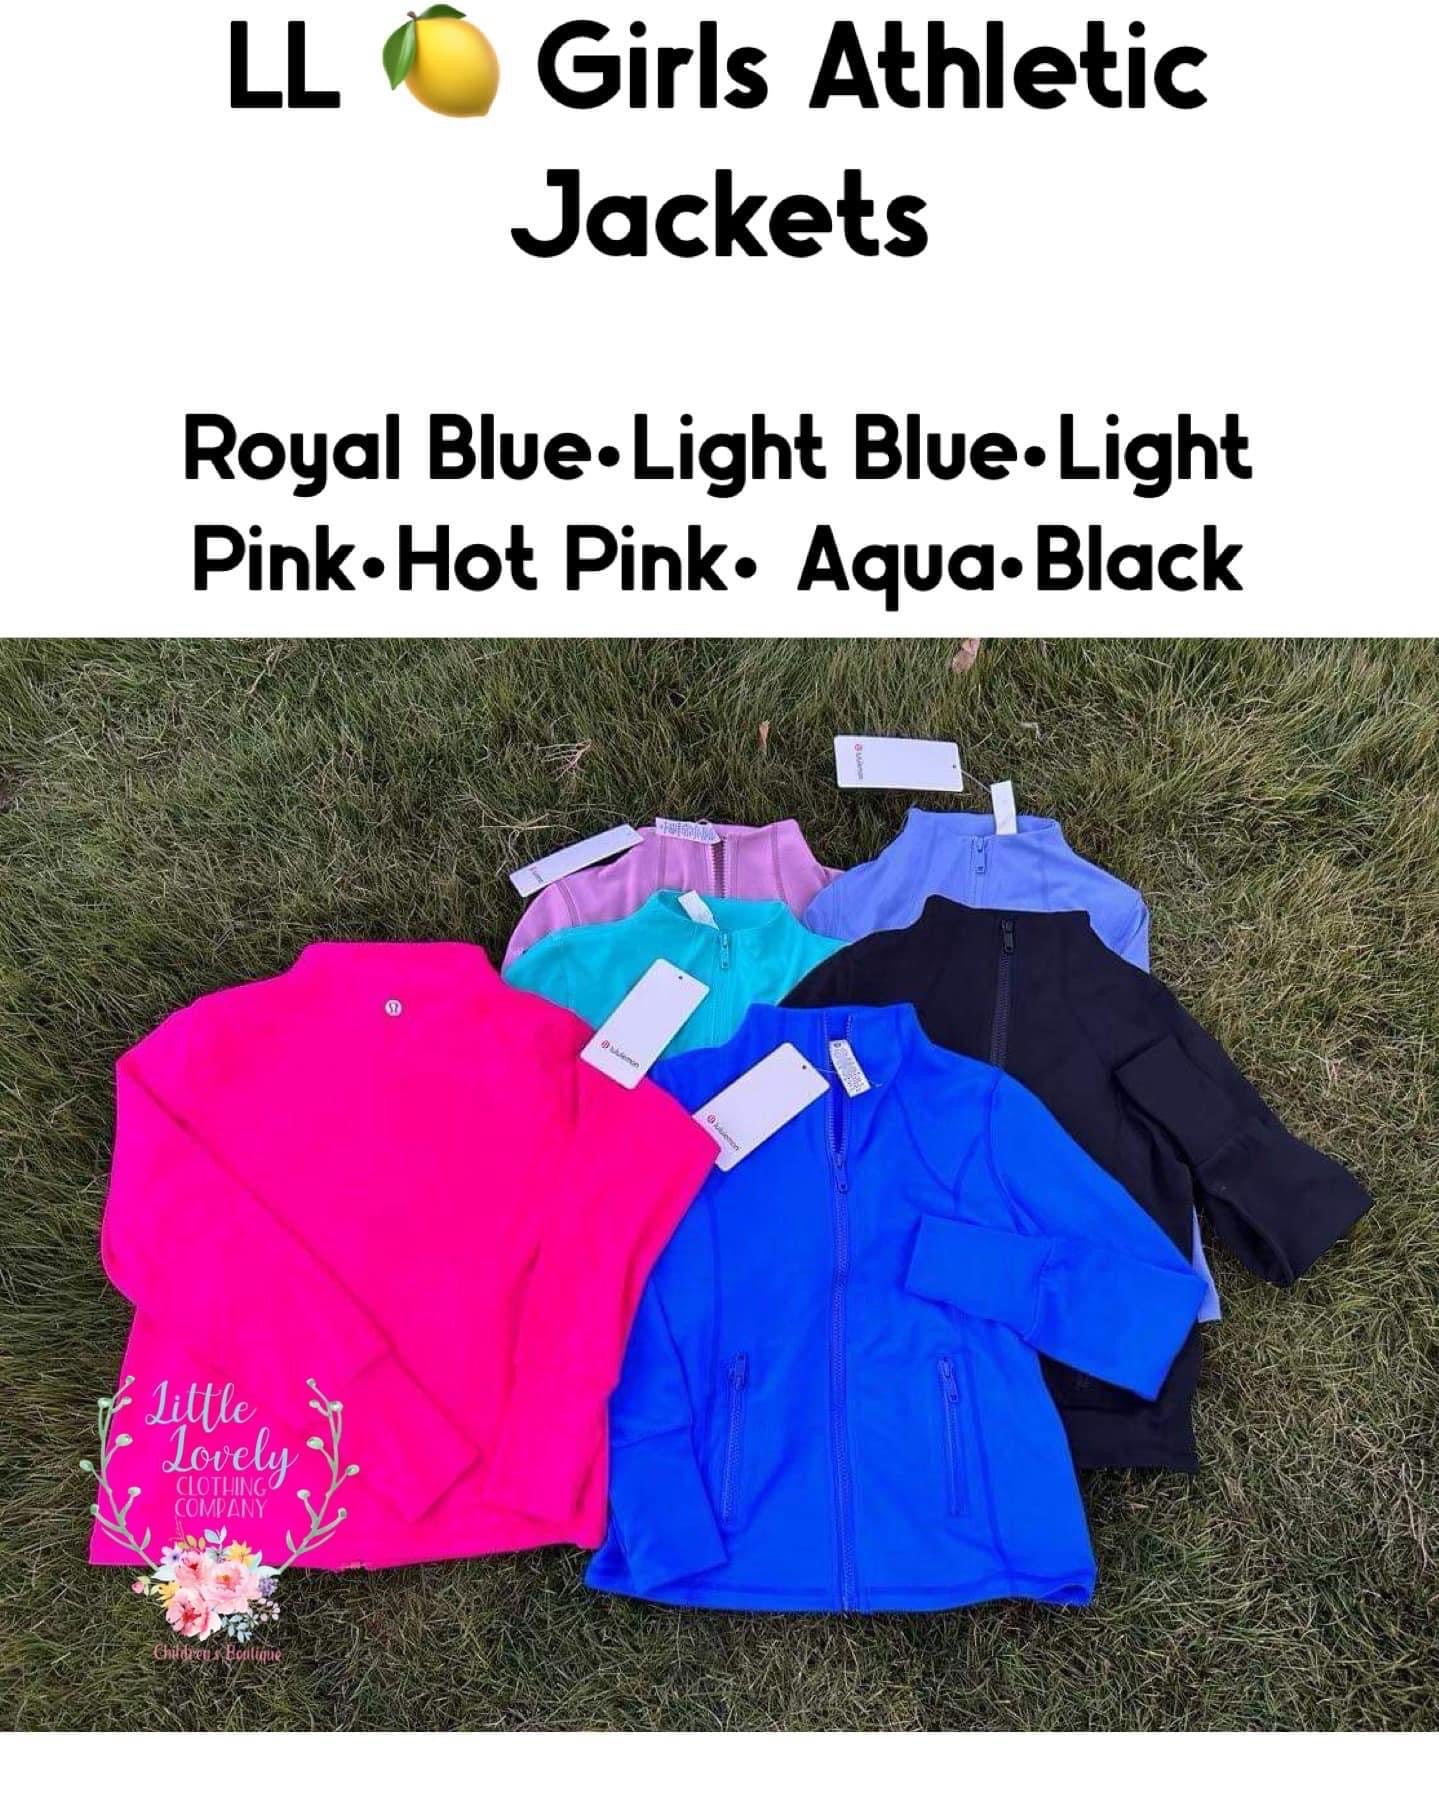 LL Girls Athletic Jacket Pre-Sale Eta Feb to Customers